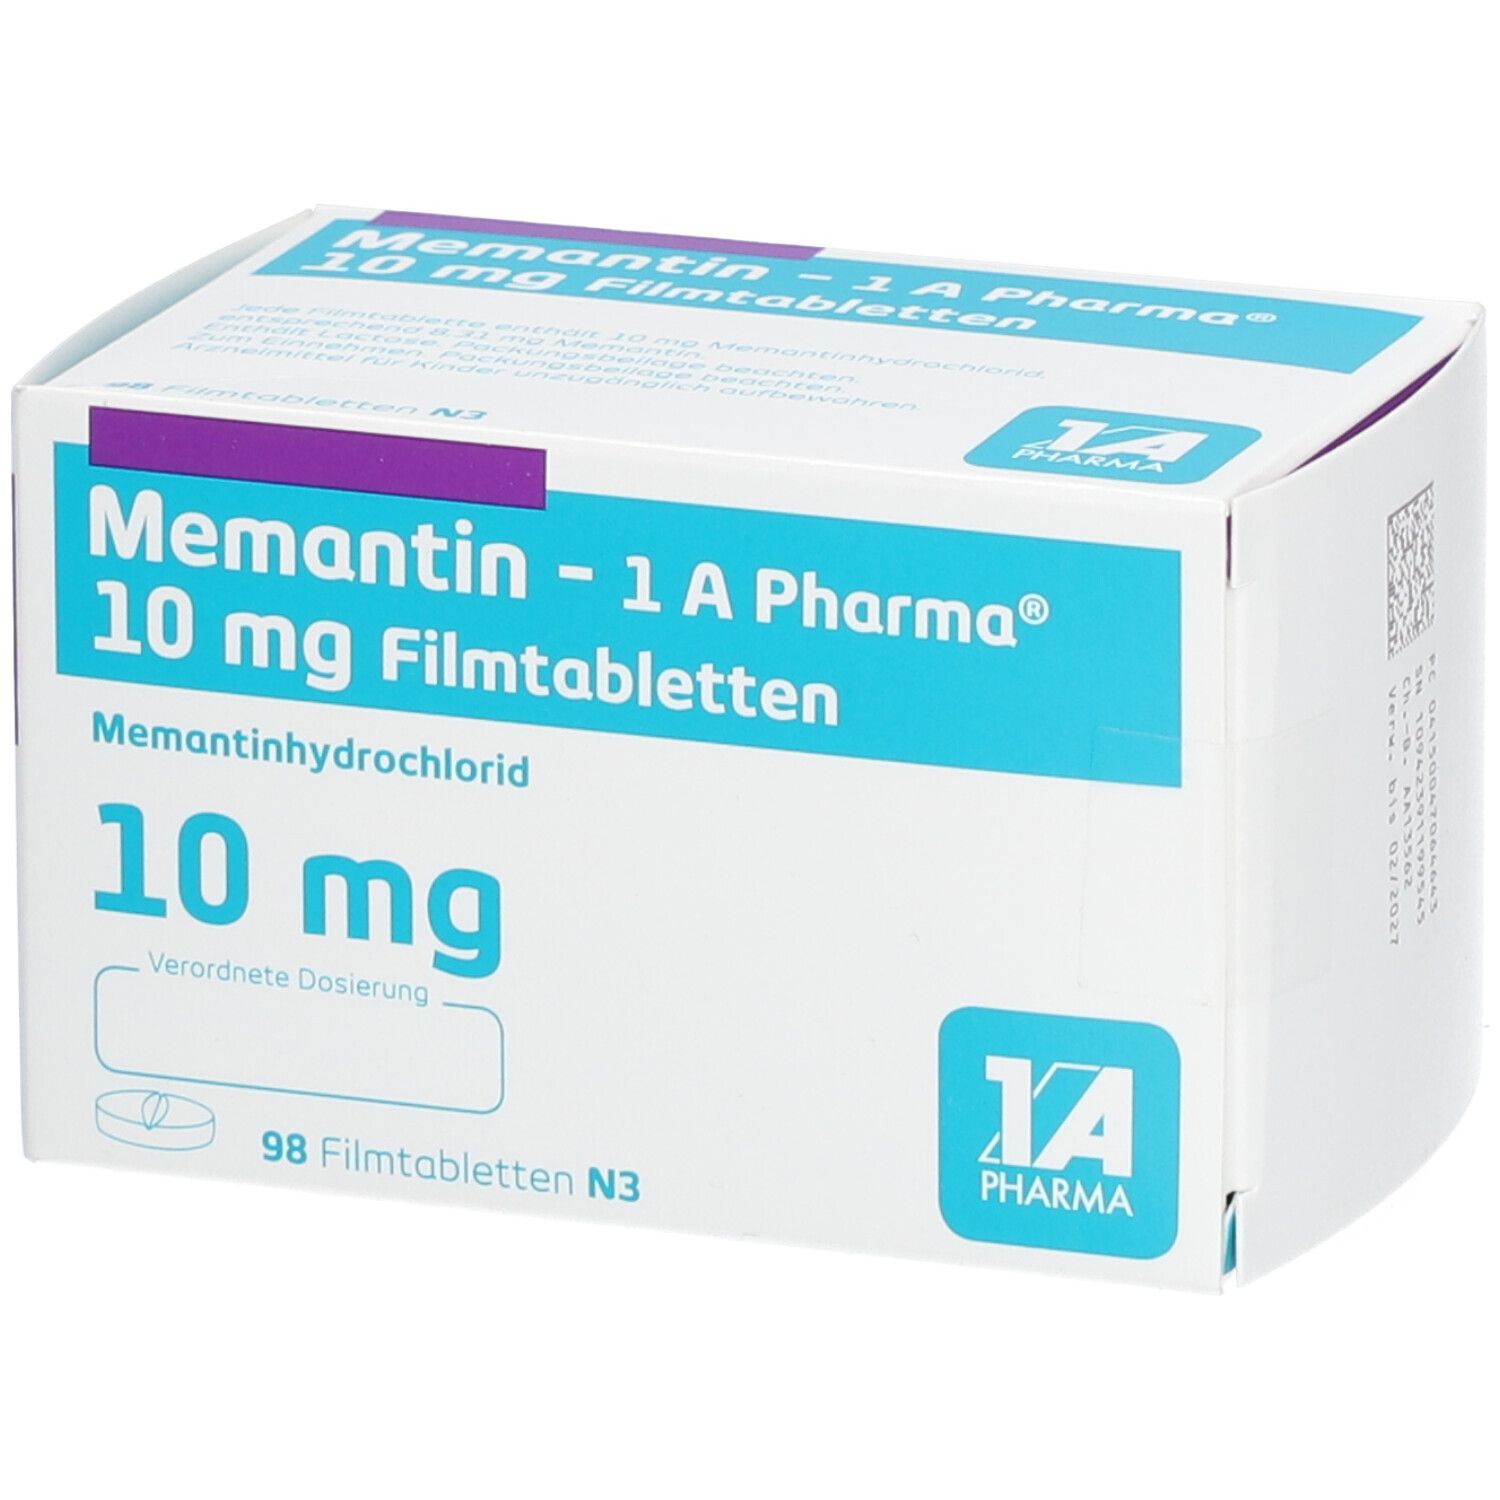 Memantin 1A Pharma® 10Mg